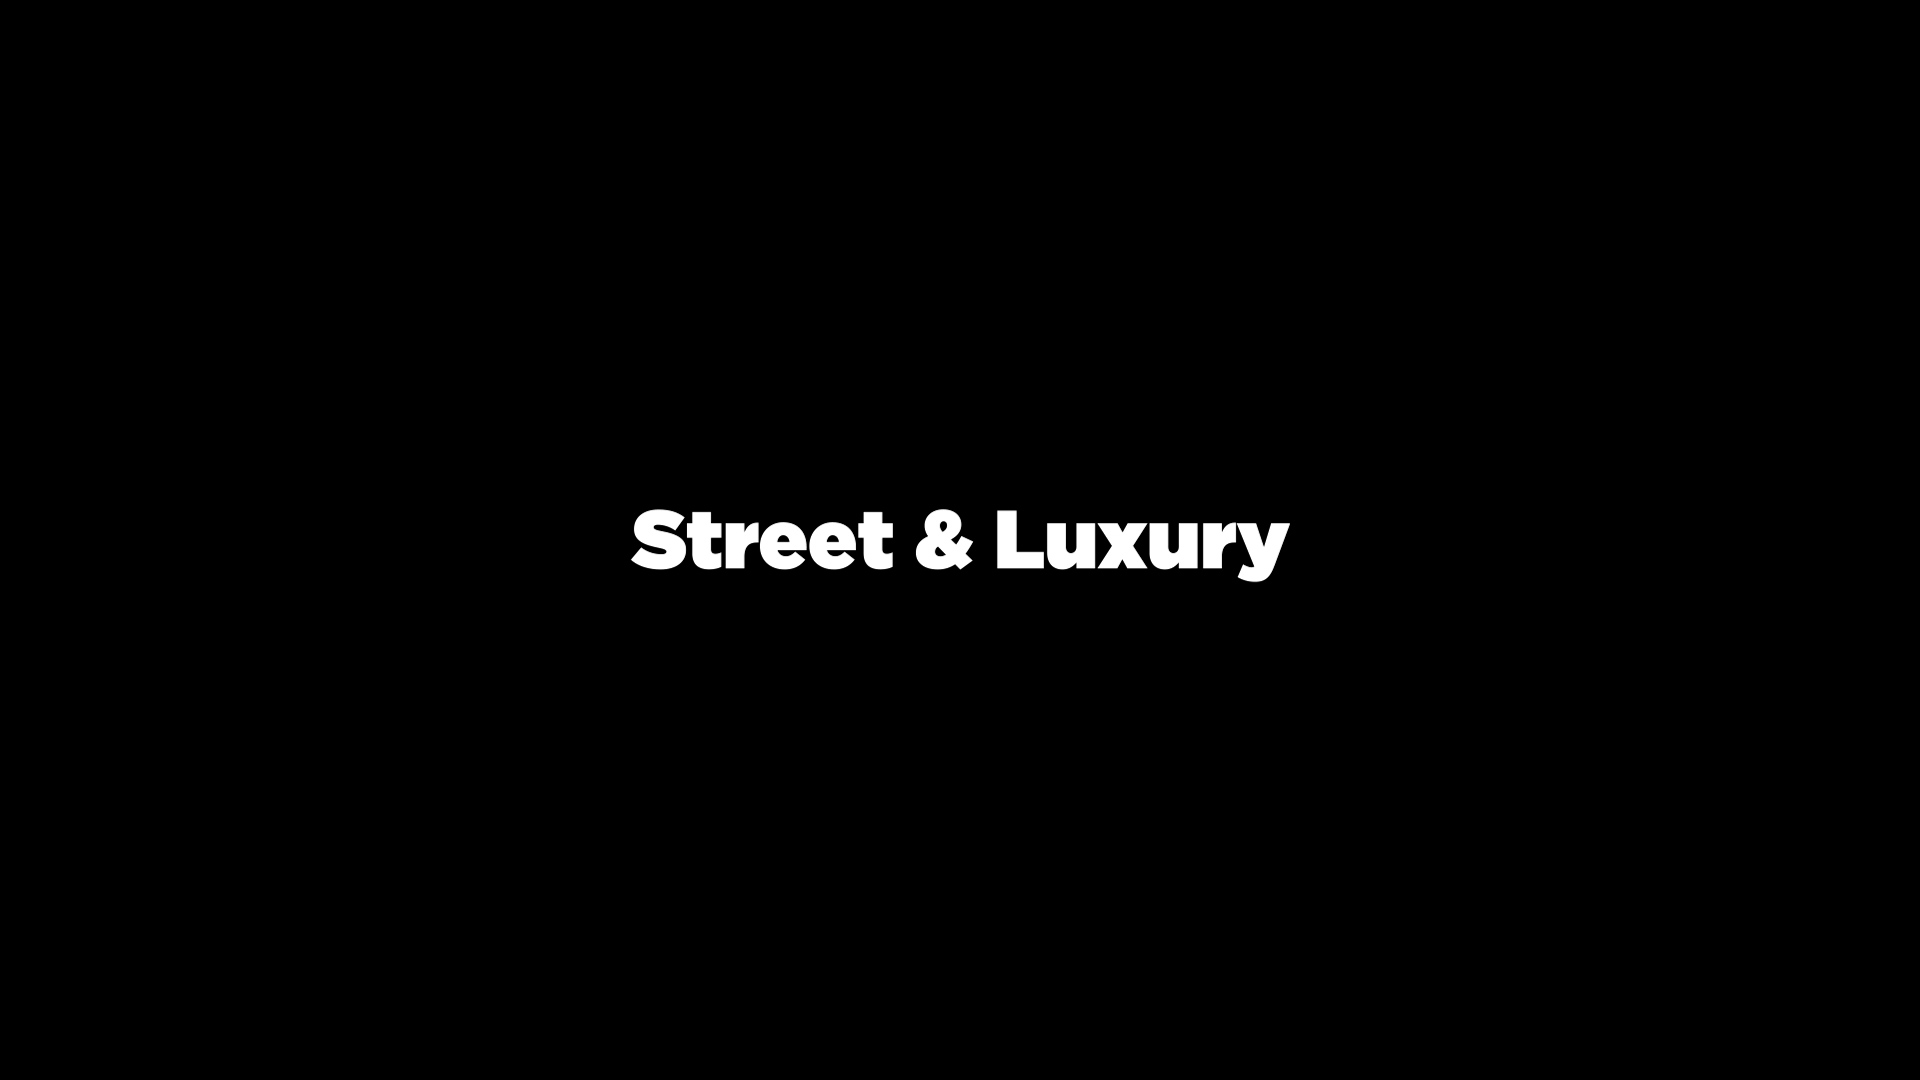 Street & Luxury